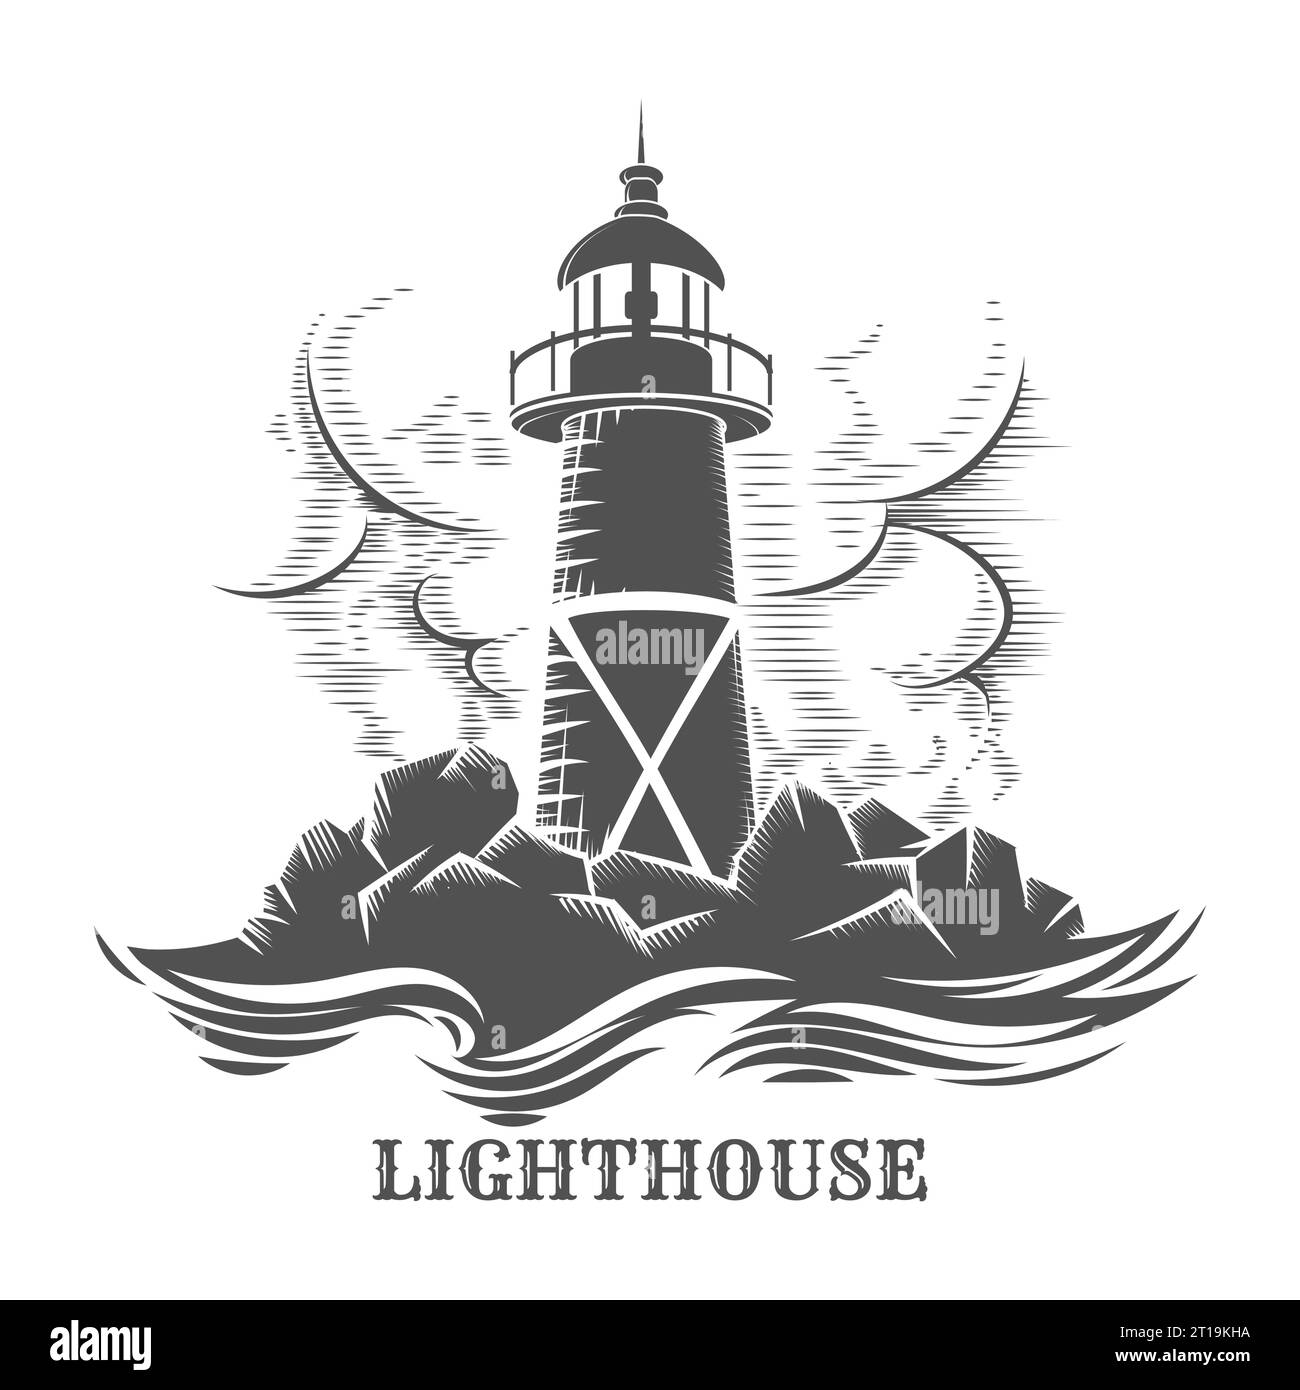 Lighthouse Monochrome Engraving Emblemisolated on white Vector illustration Stock Vector